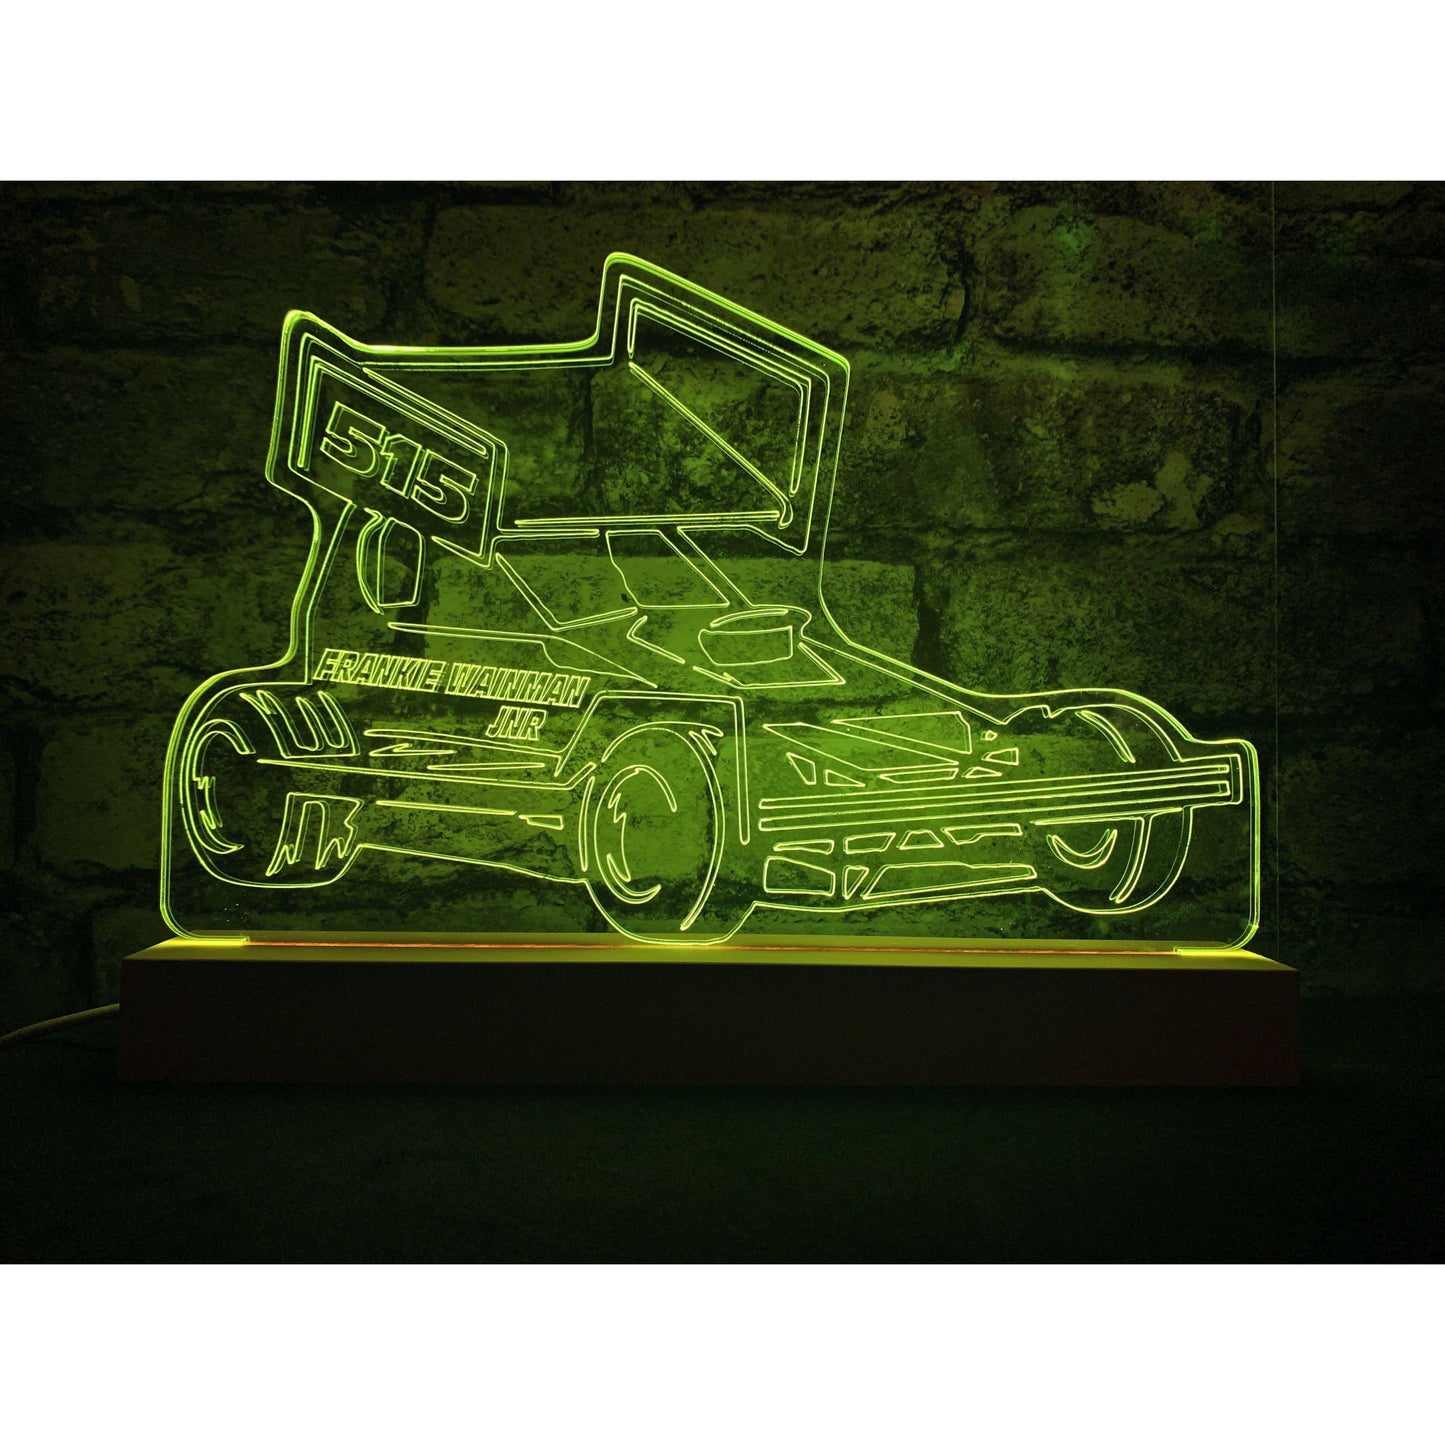 BRISCA F1 NIGHT LIGHT - LARGE WOODEN BASE - Night Light - Stock Car & Banger Toy Tracks